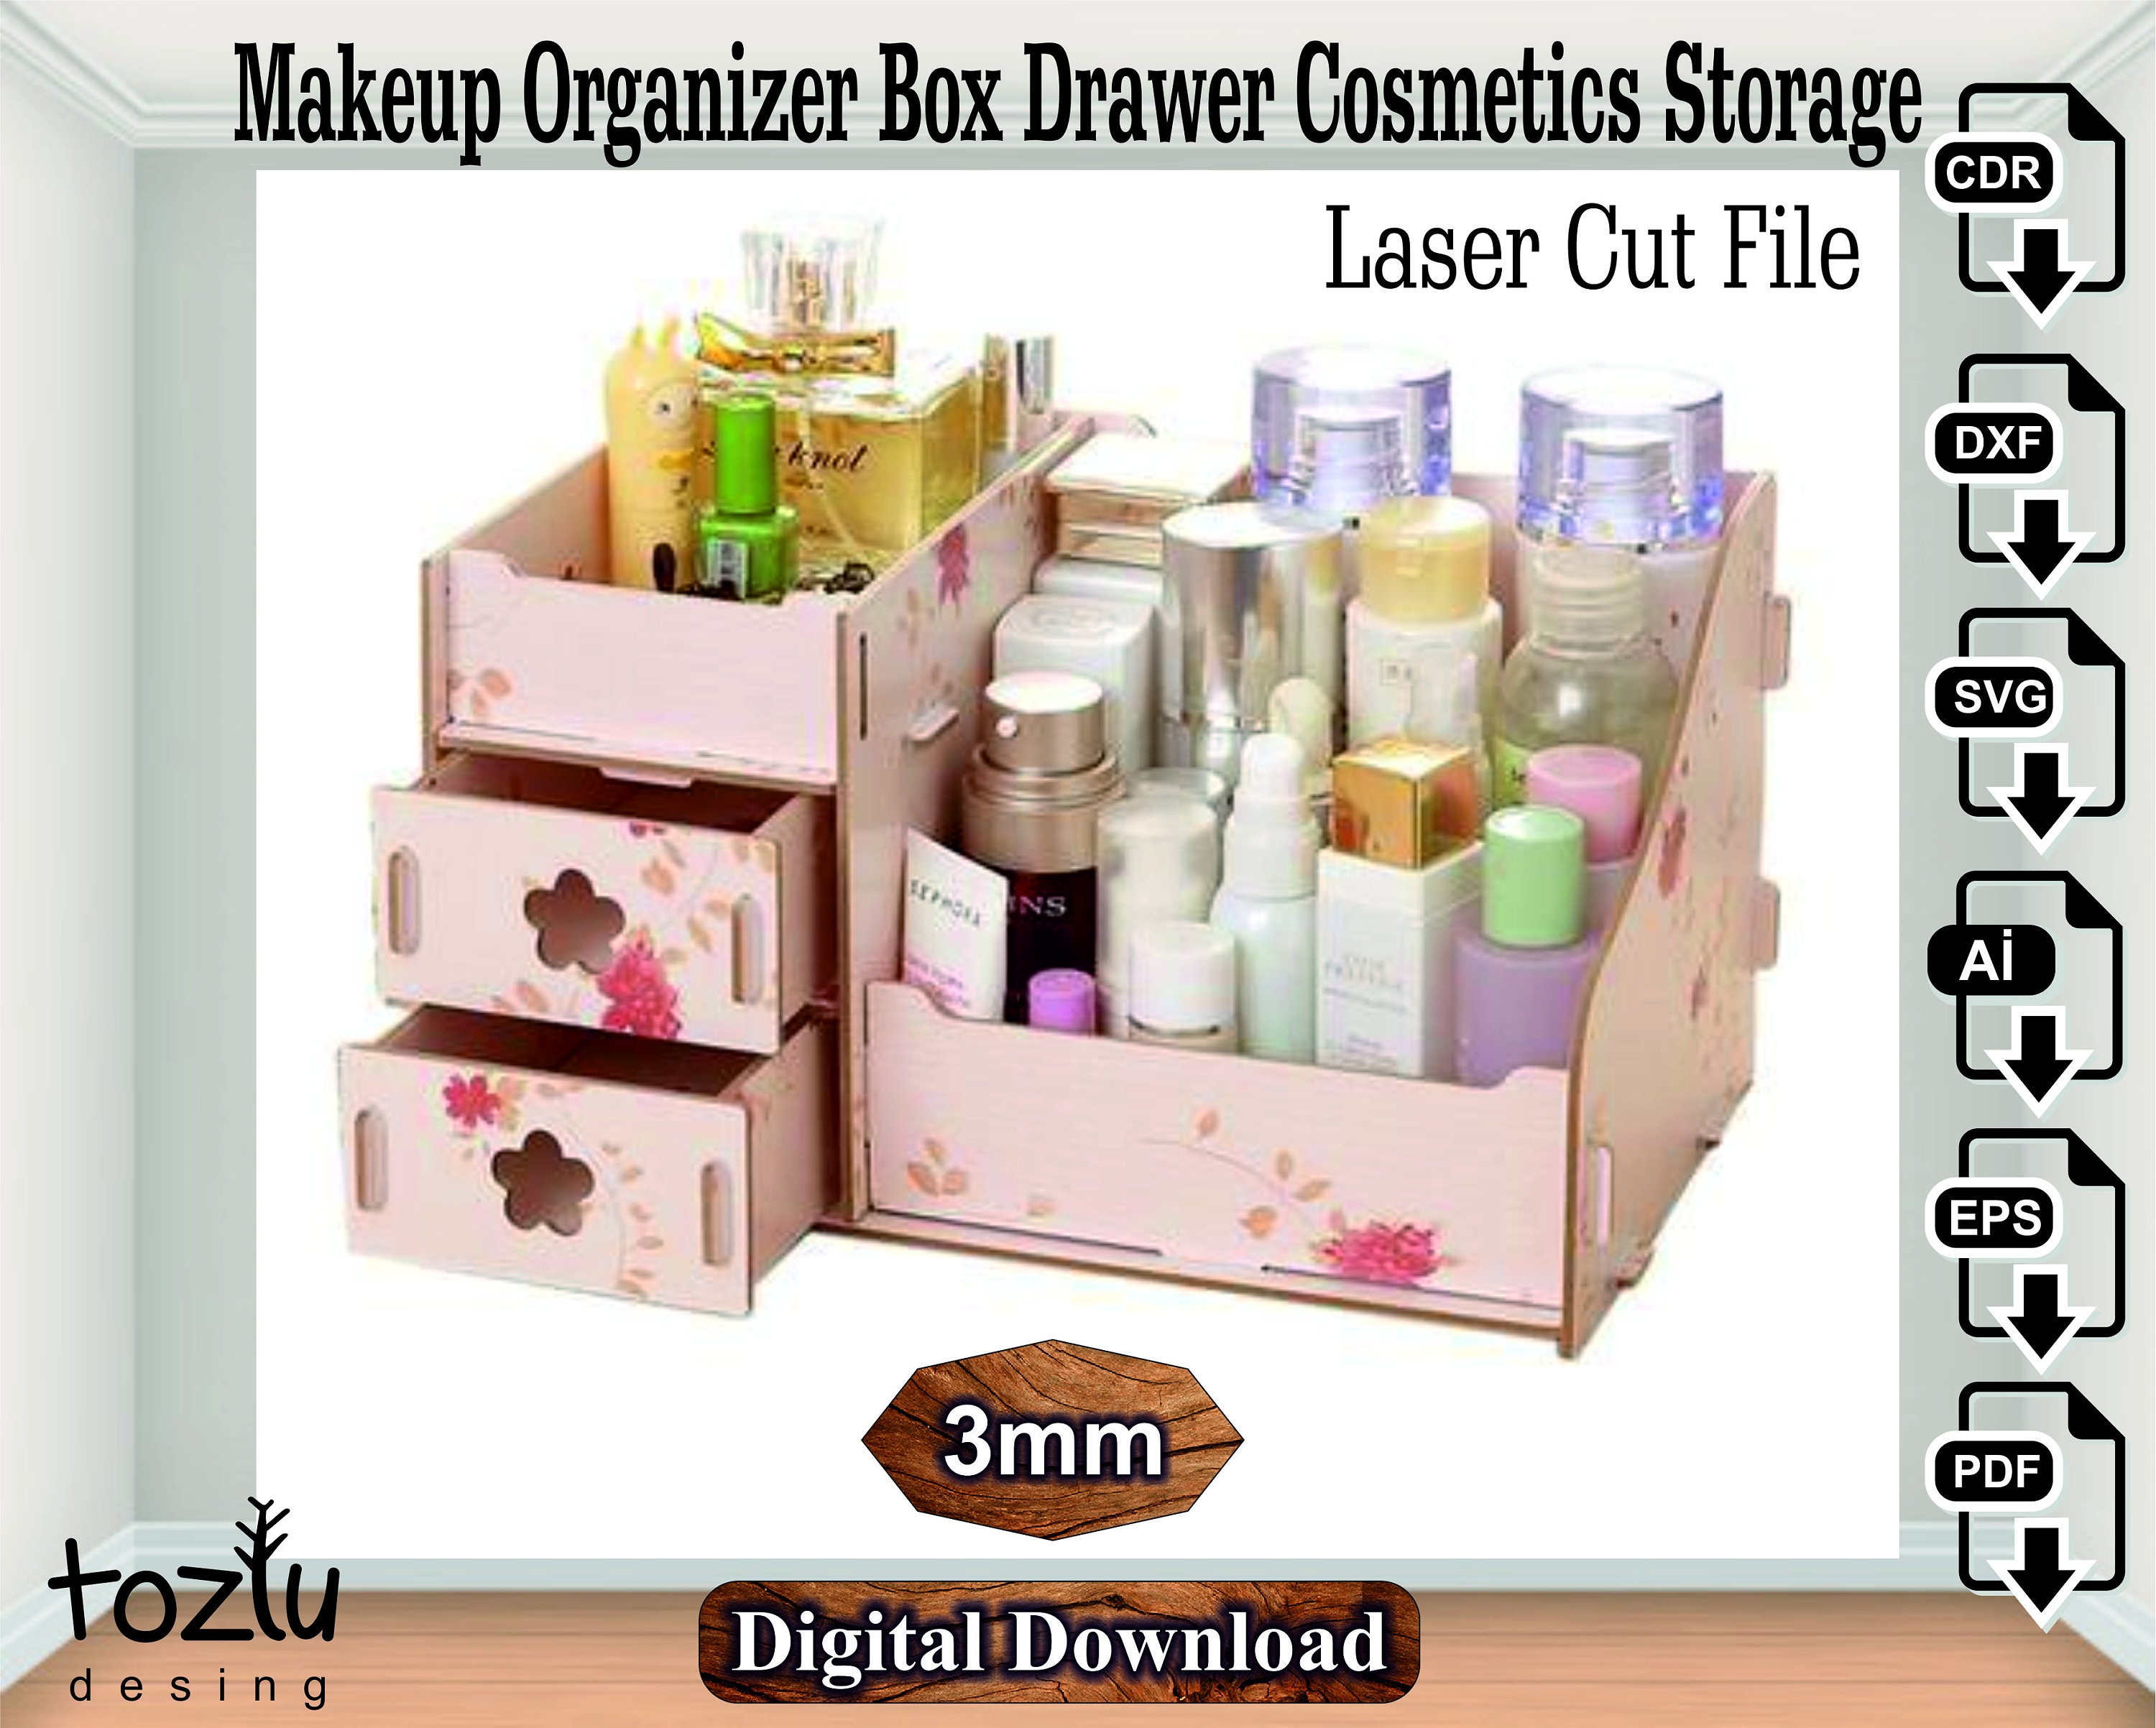 Wooden Makeup Organizer Box Laser Cut Drawer Cosmetics Storage 